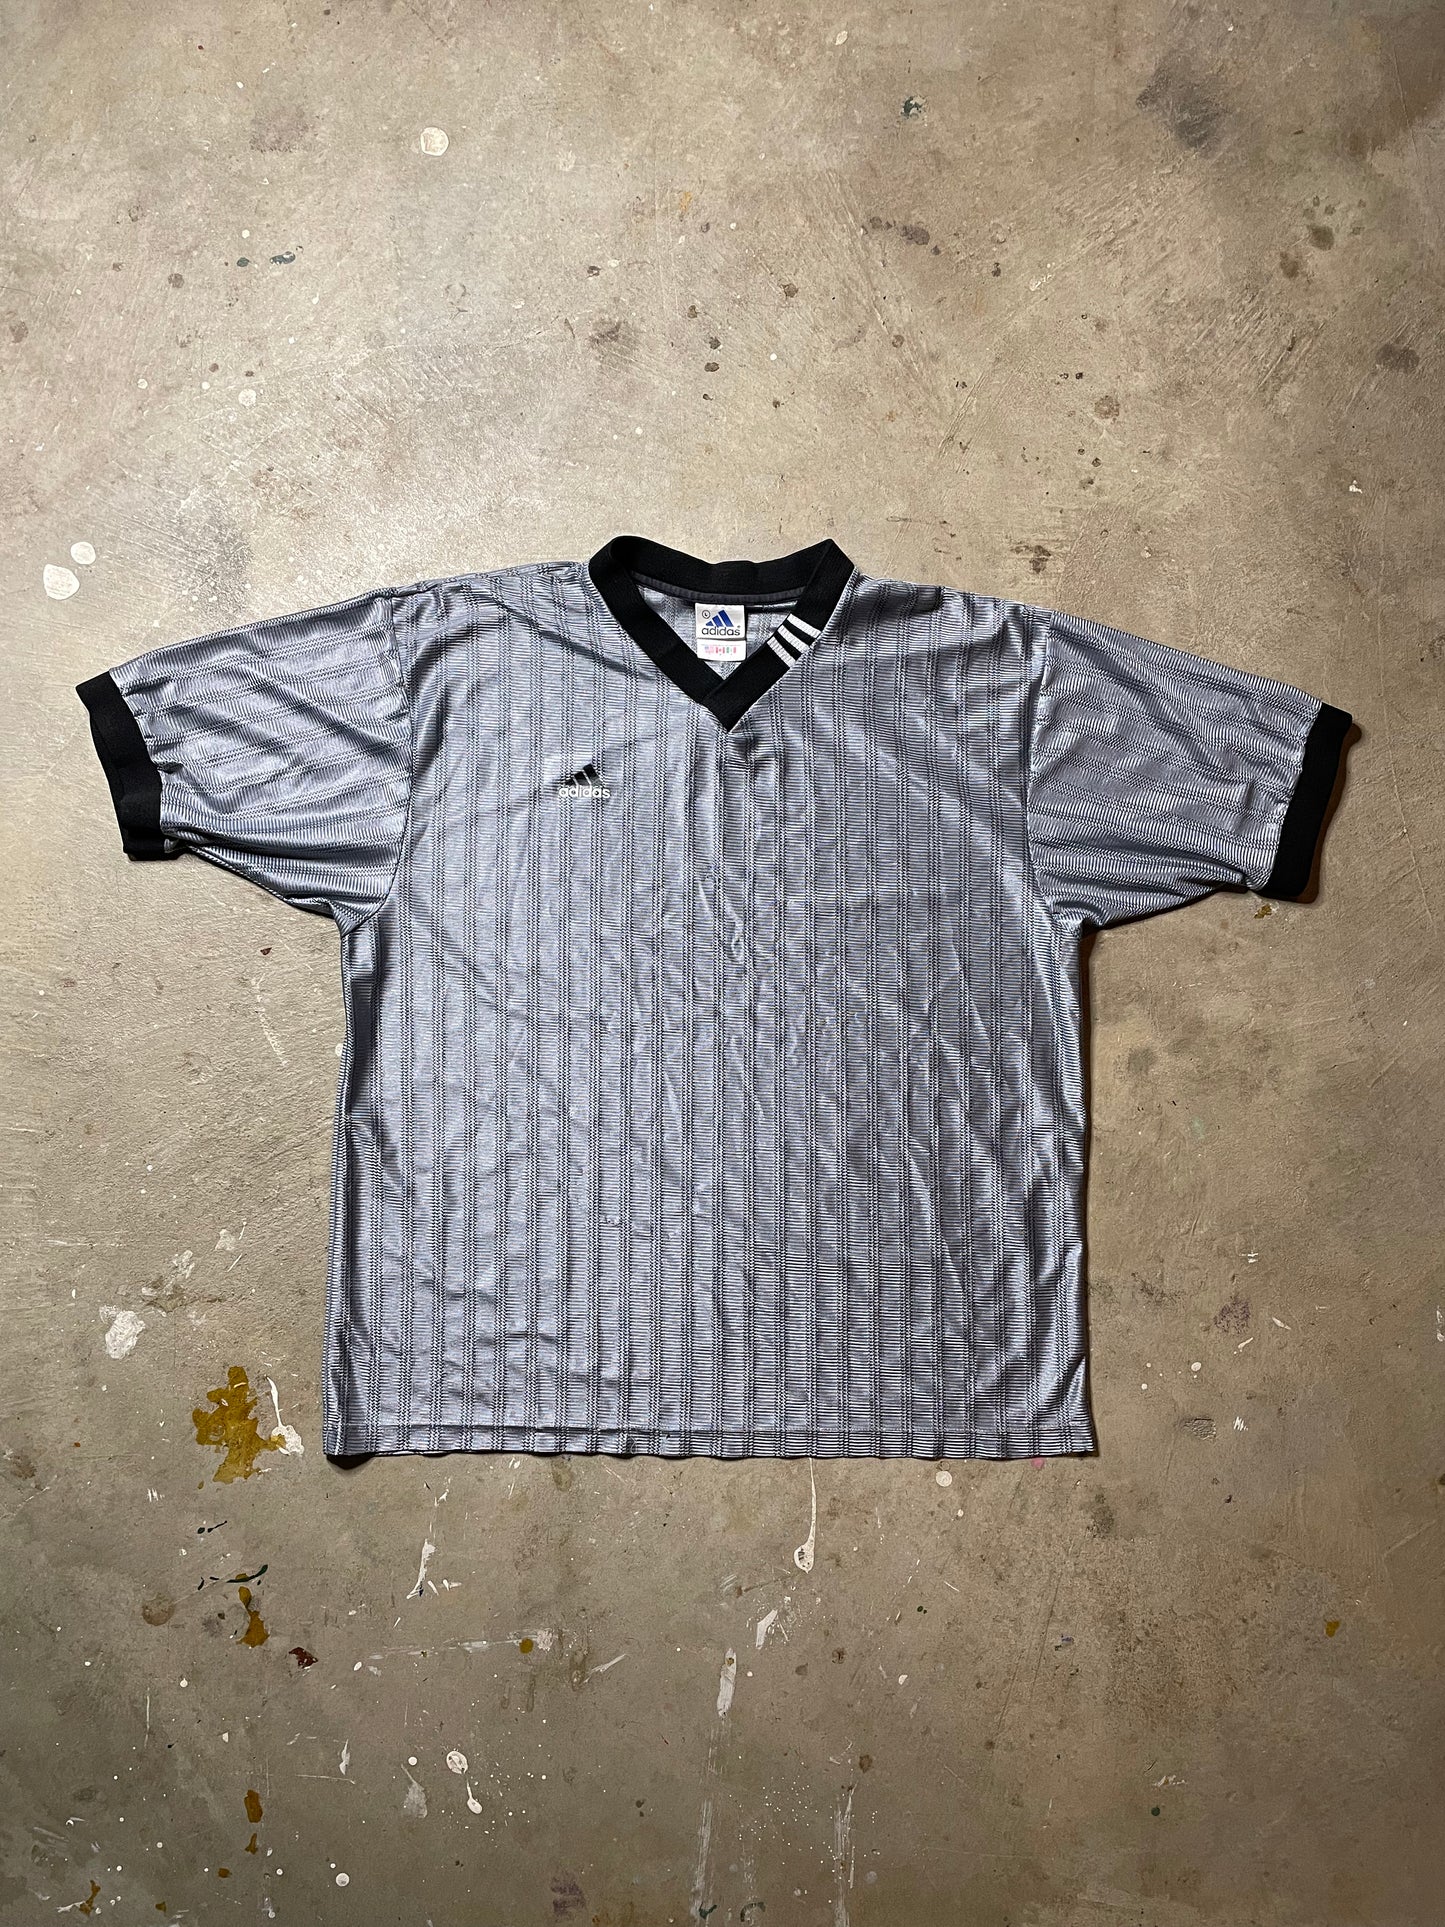 1990s Adidas Soccer Jersey